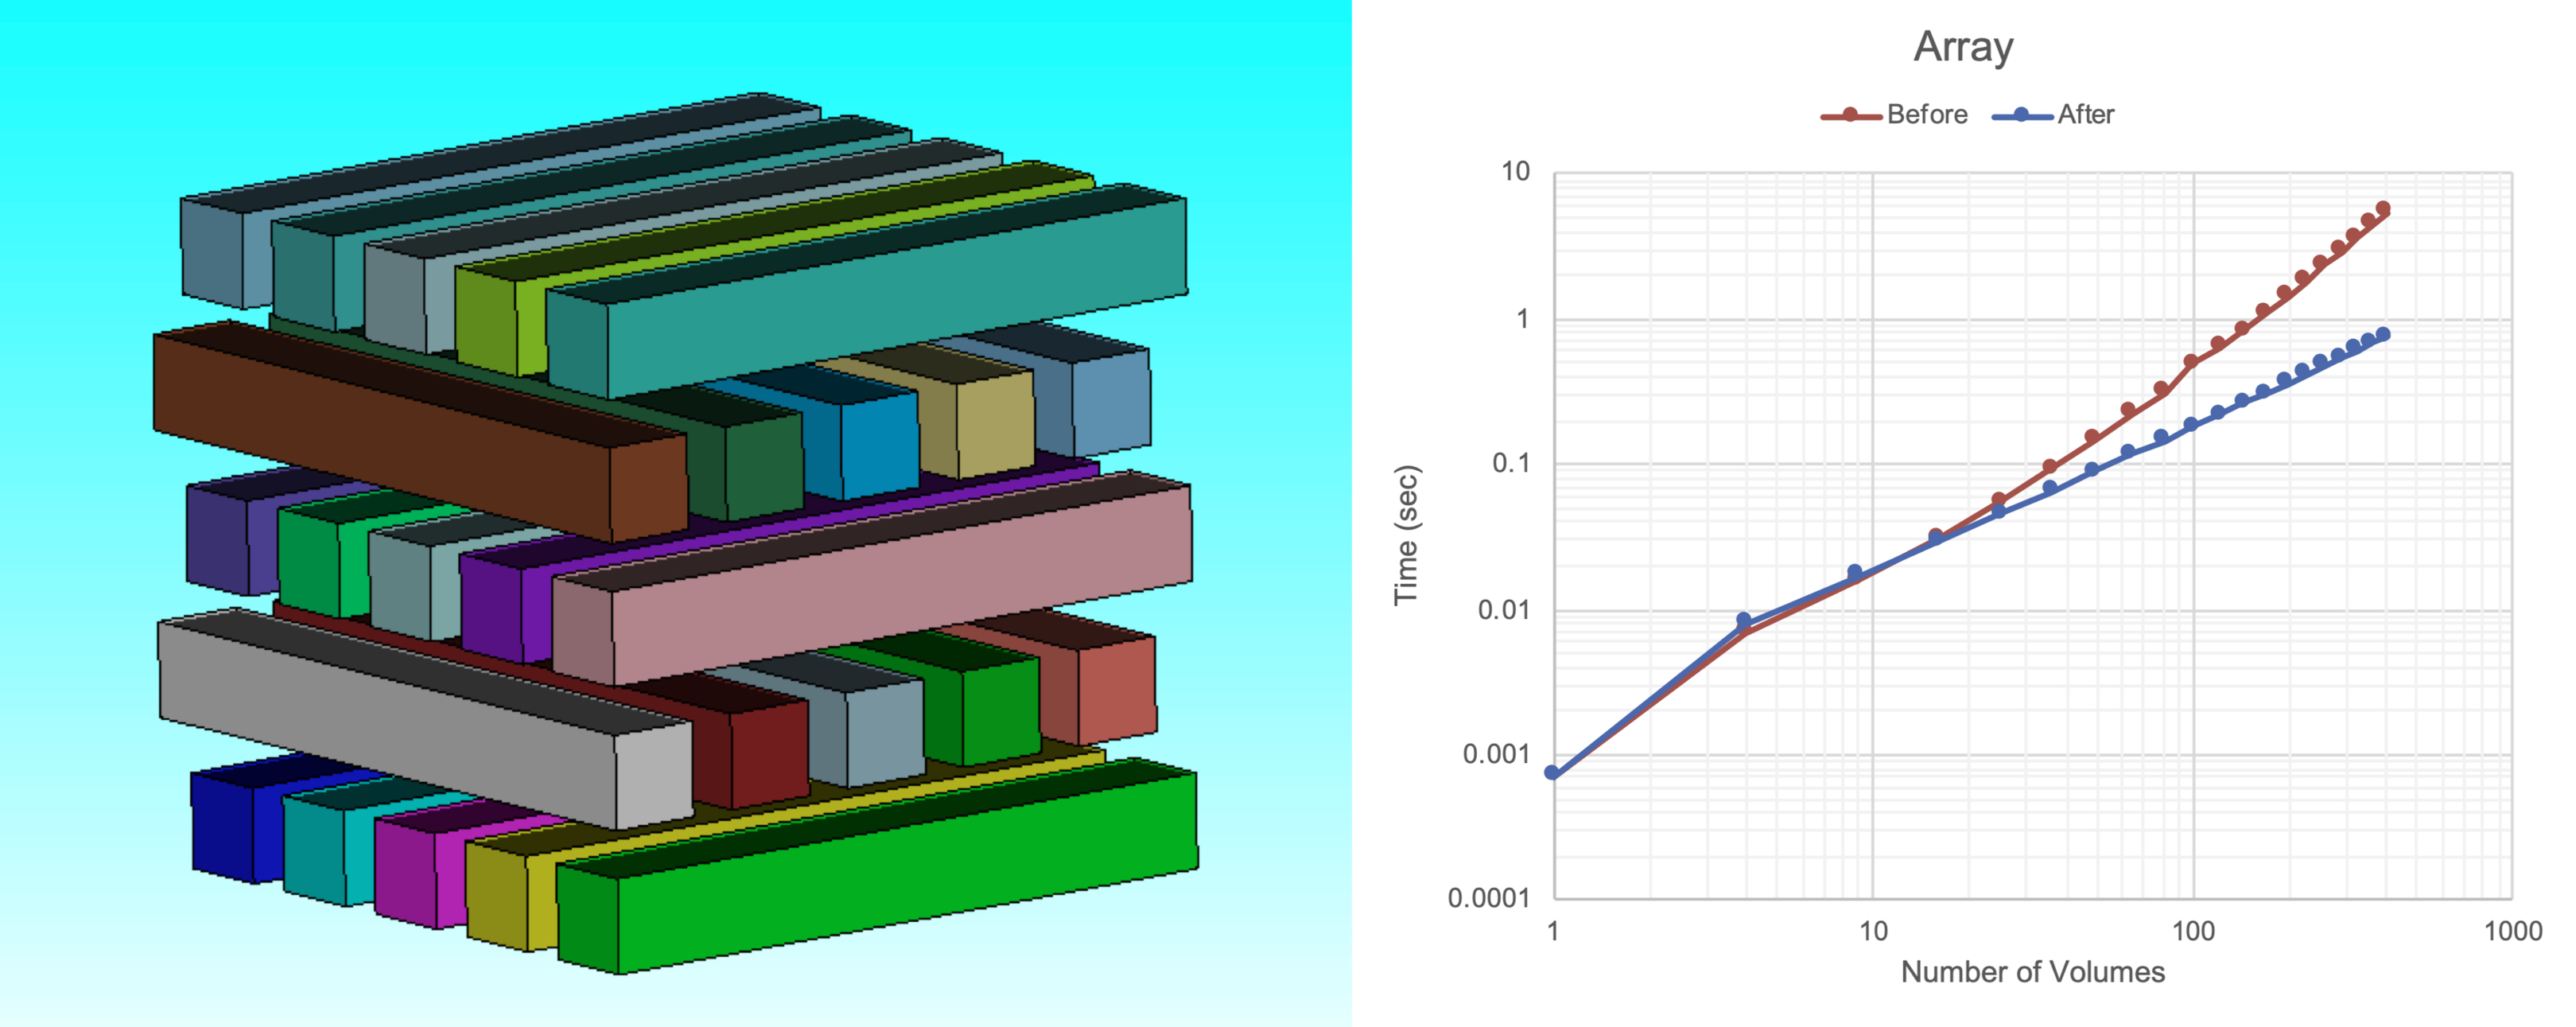 Coreform Cubit imprint speed improvements: &lsquo;Array&rsquo; benchmark.